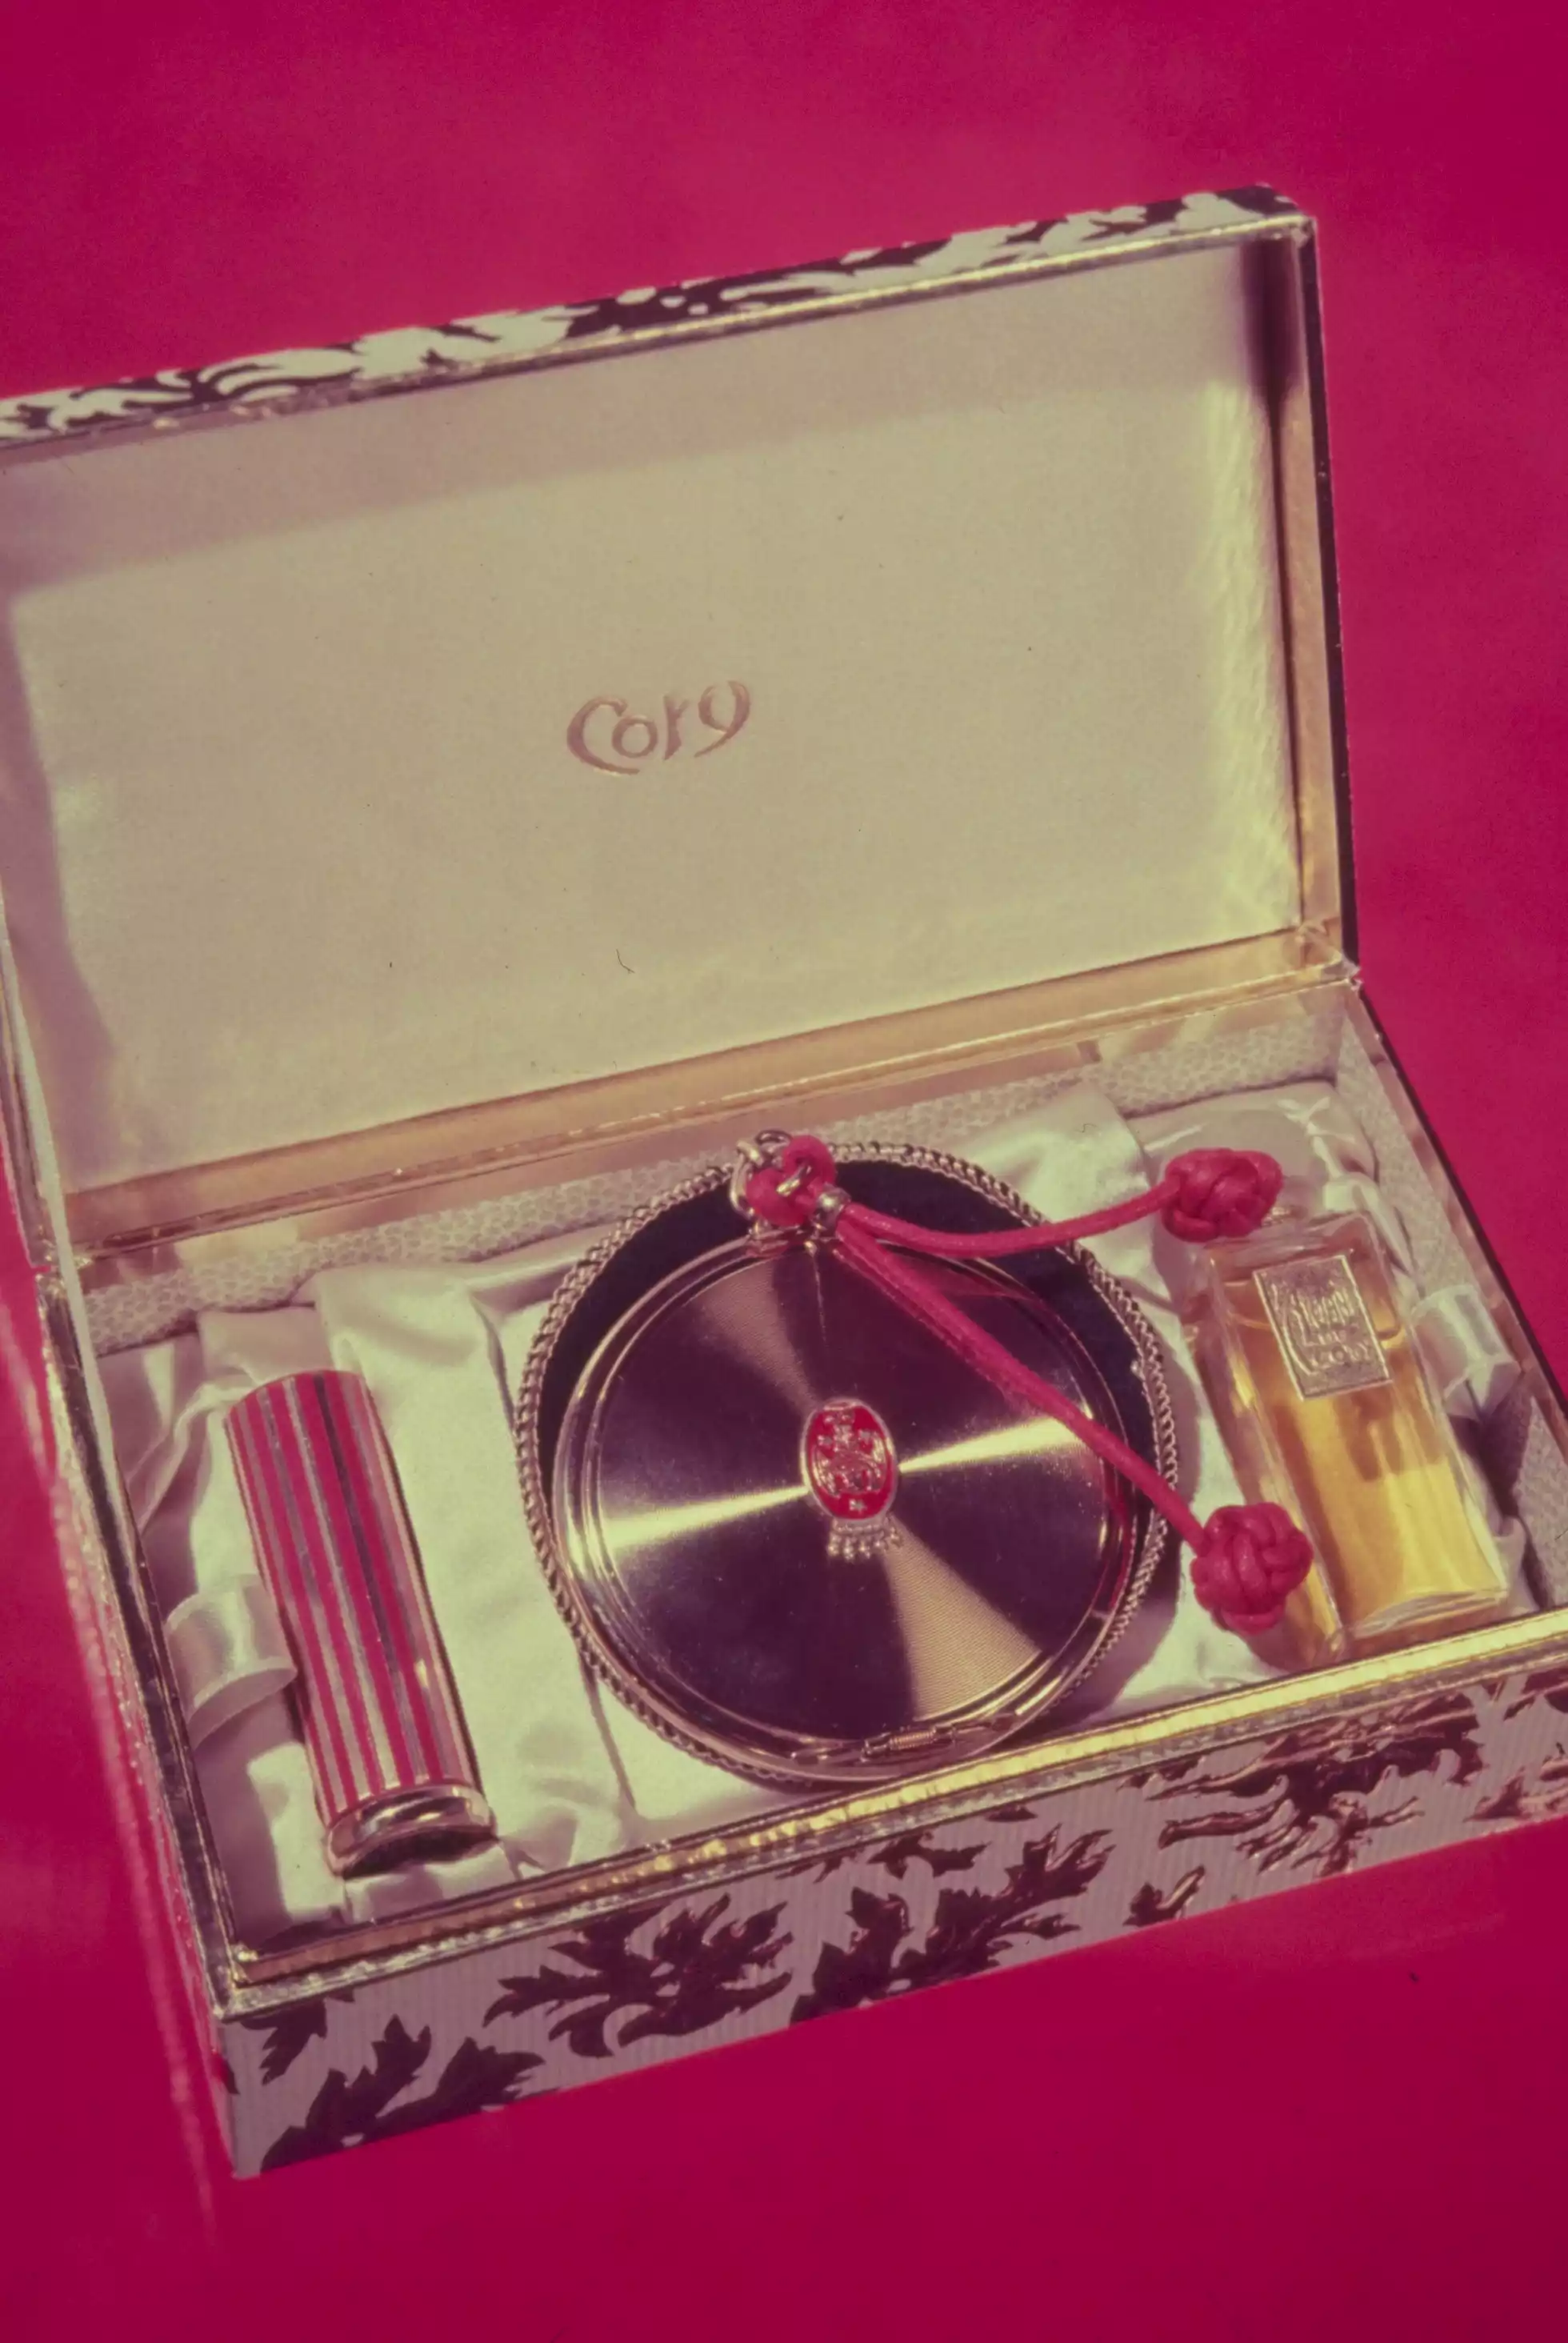 Vintage box with perfume and makeup